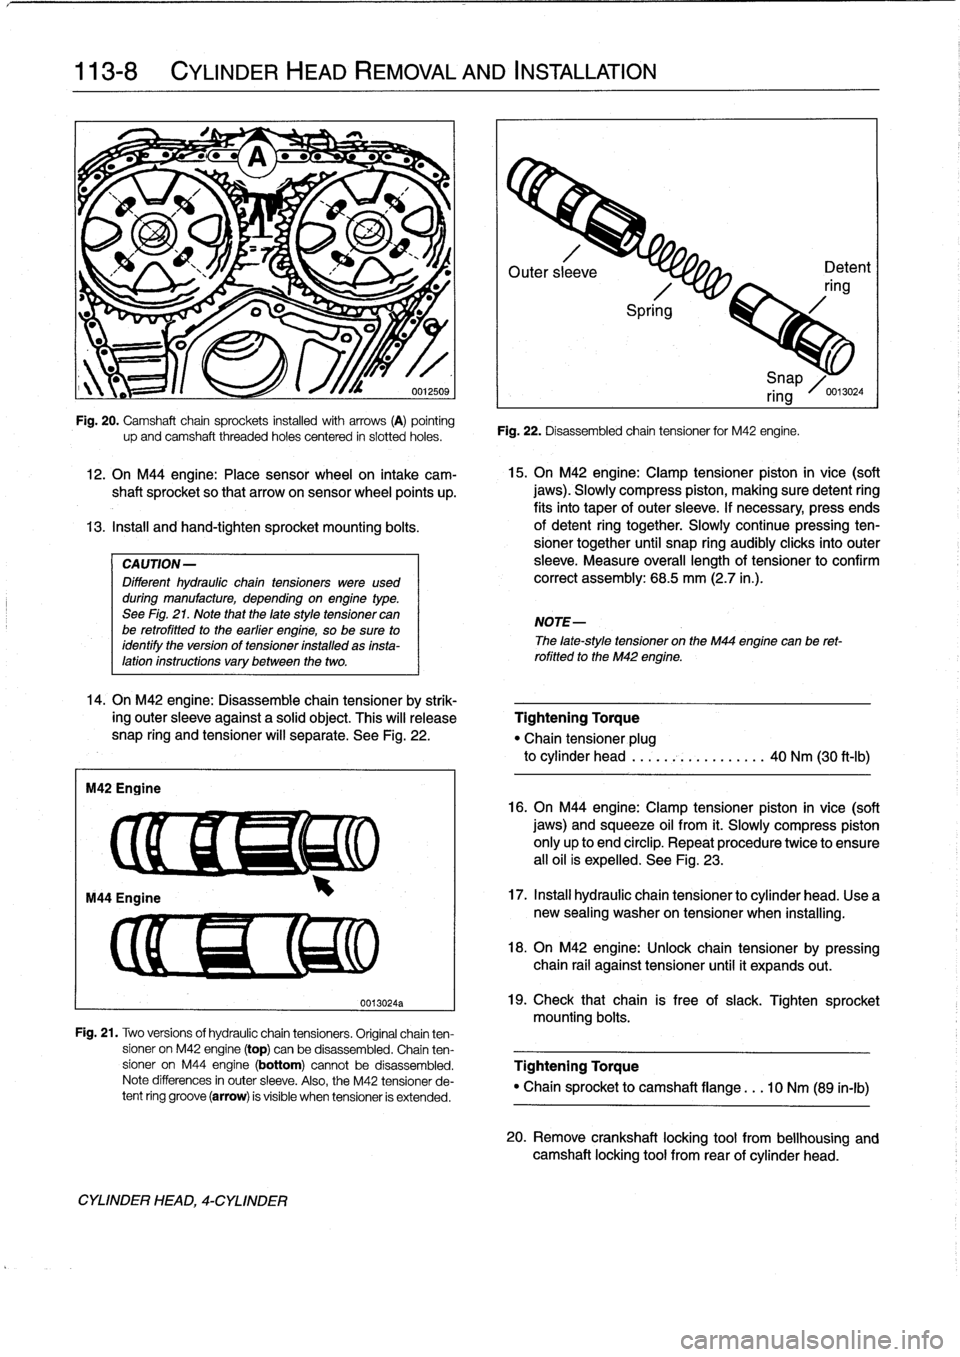 BMW 325i 1993 E36 Workshop Manual 
113-8

	

CYLINDER
HEAD
REMOVAL
AND
INSTALLATION

IW?
-
L
/~f
W

	

~
4r

"

-
"

	

;,s
1

12
.
On
M44
engine
:
Place
sensor
wheel
on
intake
cam-
shaft
sprocket
so
that
arrowon
sensor
wheel
points
